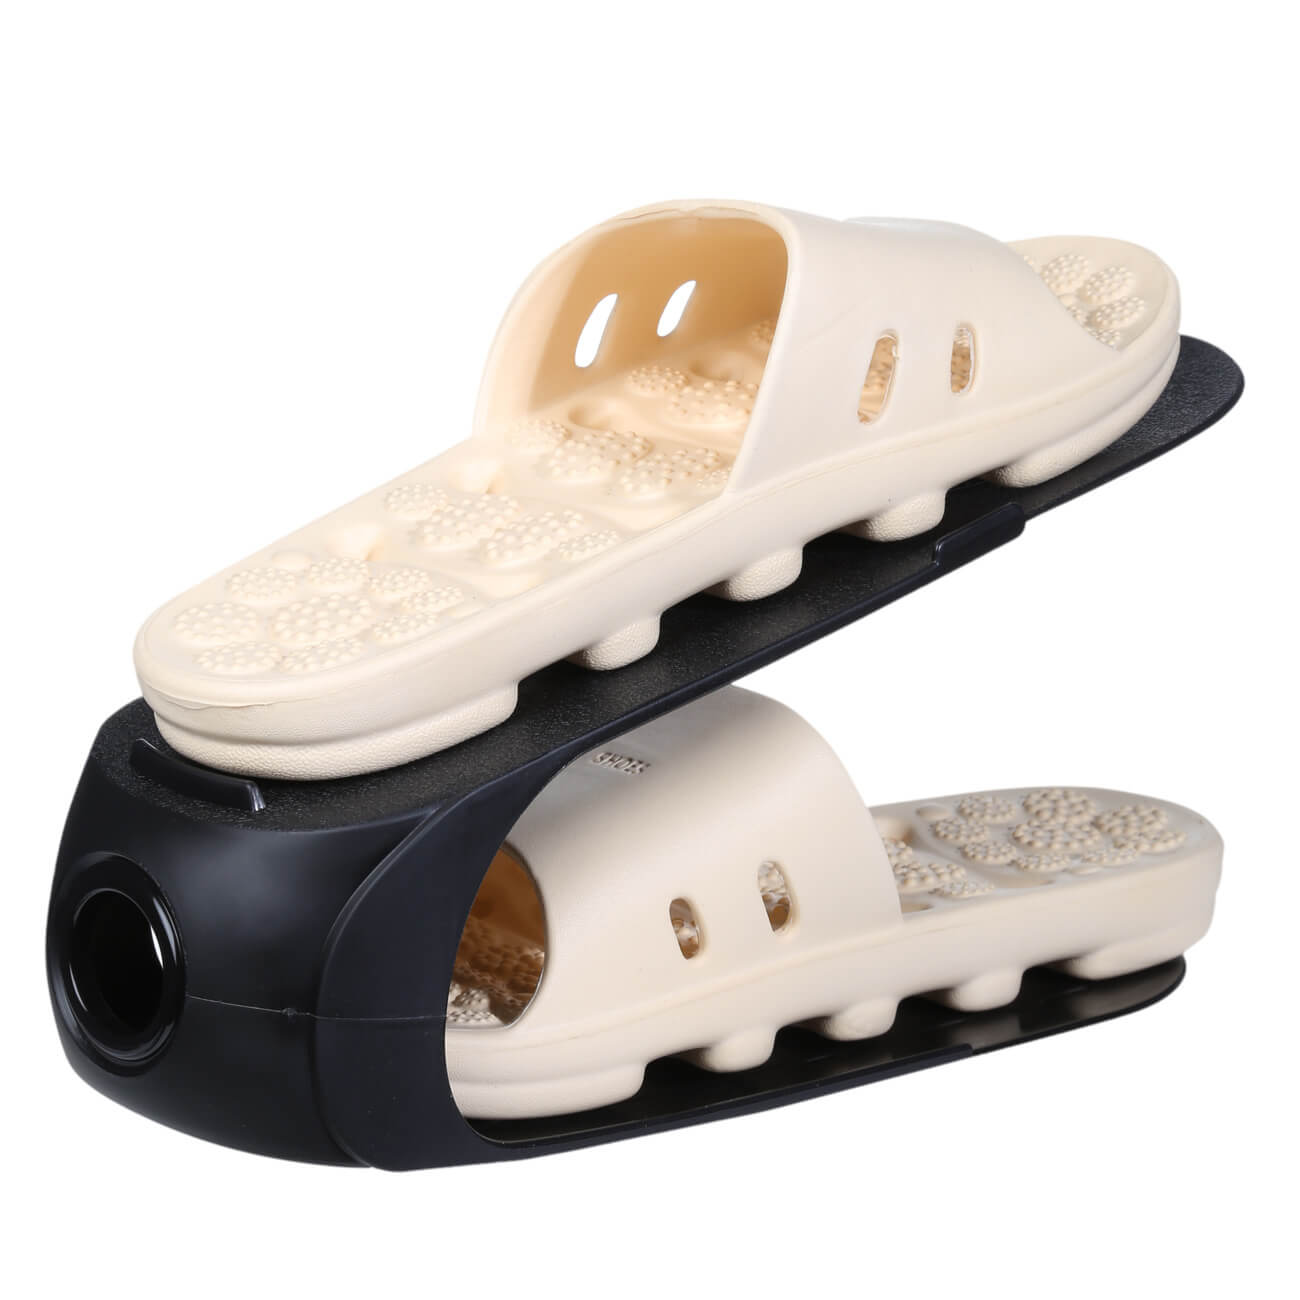 Органайзер-подставка для женской обуви, 26 см, пластик, черный, Compact органайзер для кухни пластик 16х7 5х21 см 0 4 л белый y4 6478